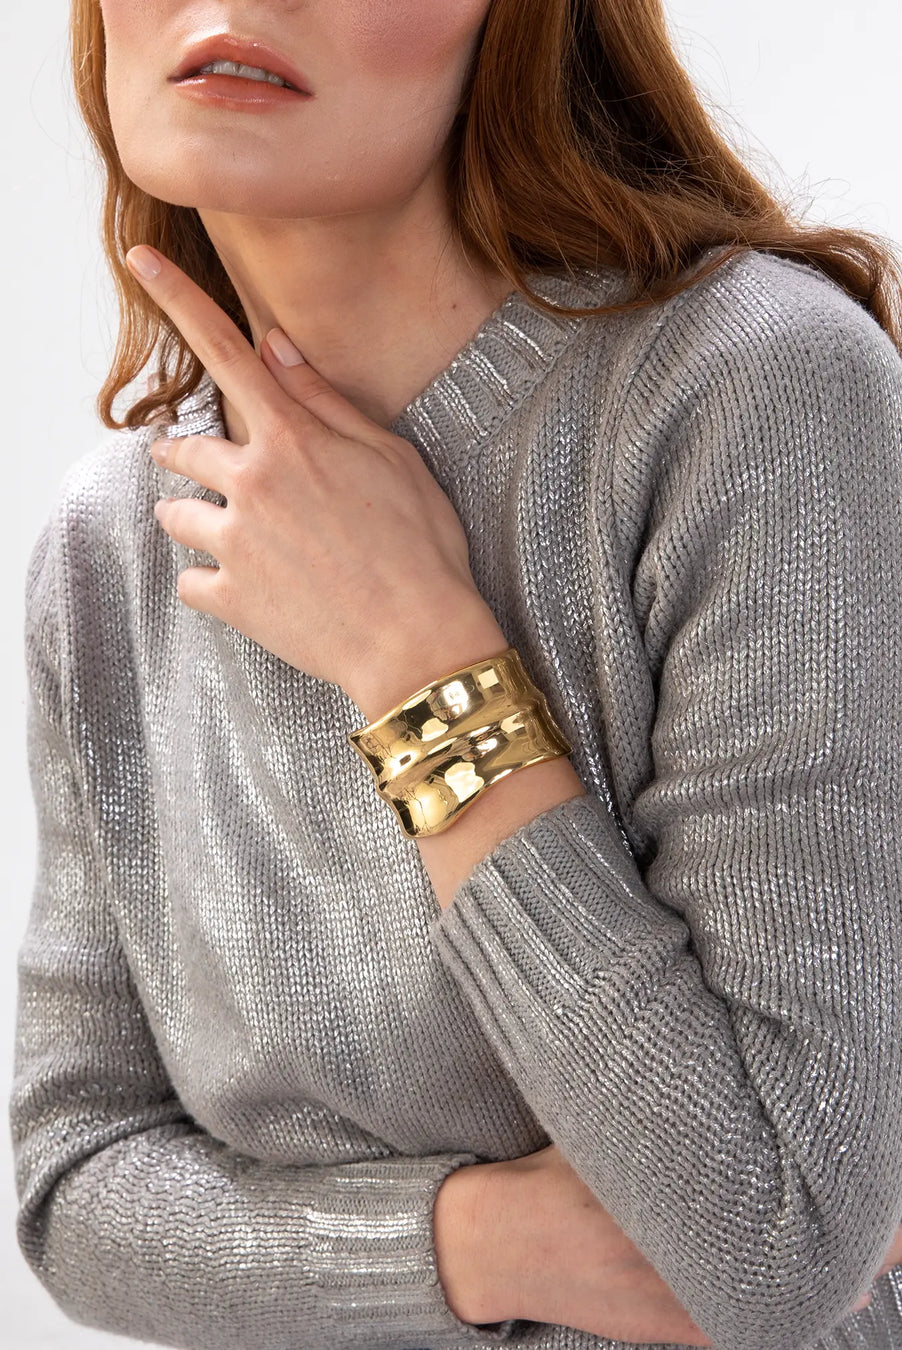 MUNIFICENCE Cuff. Segmented design in high gloss finish, cuff bracelet, 18K gold vermeil, handmade, hypoallergenic, water-resistant